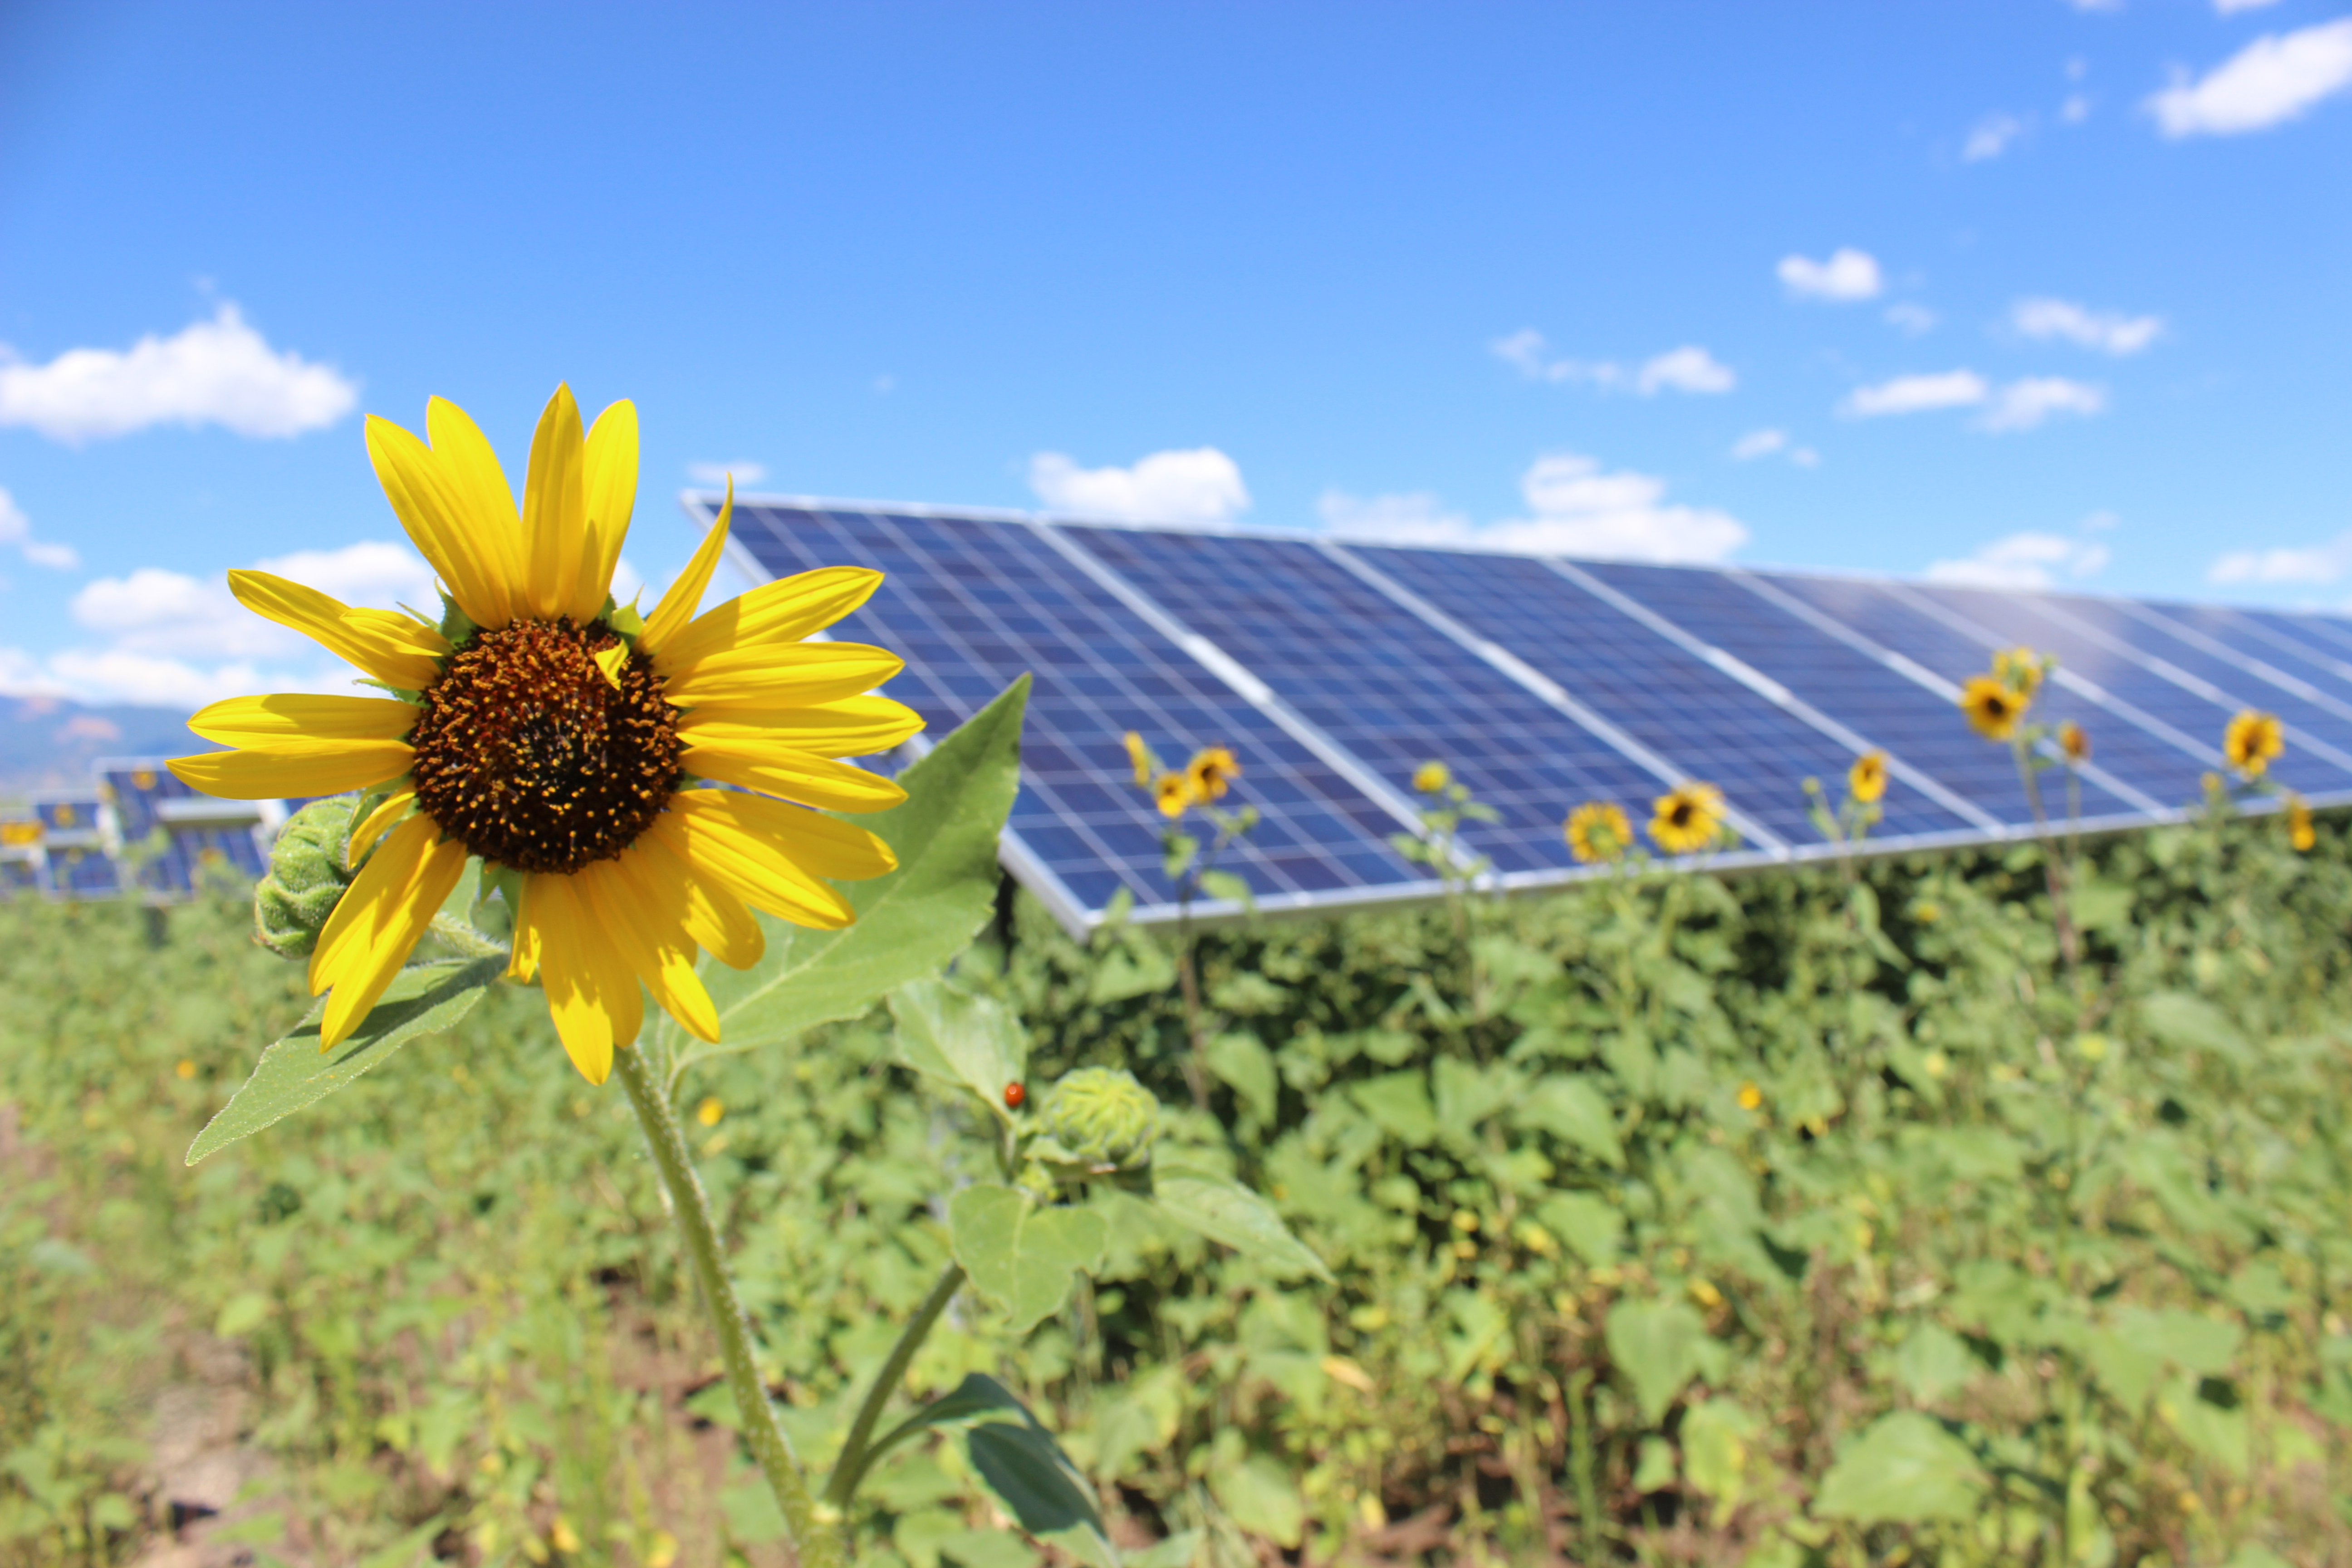 SunShare adds 4.5 MW of Community Solar to Minnesota Energy Market